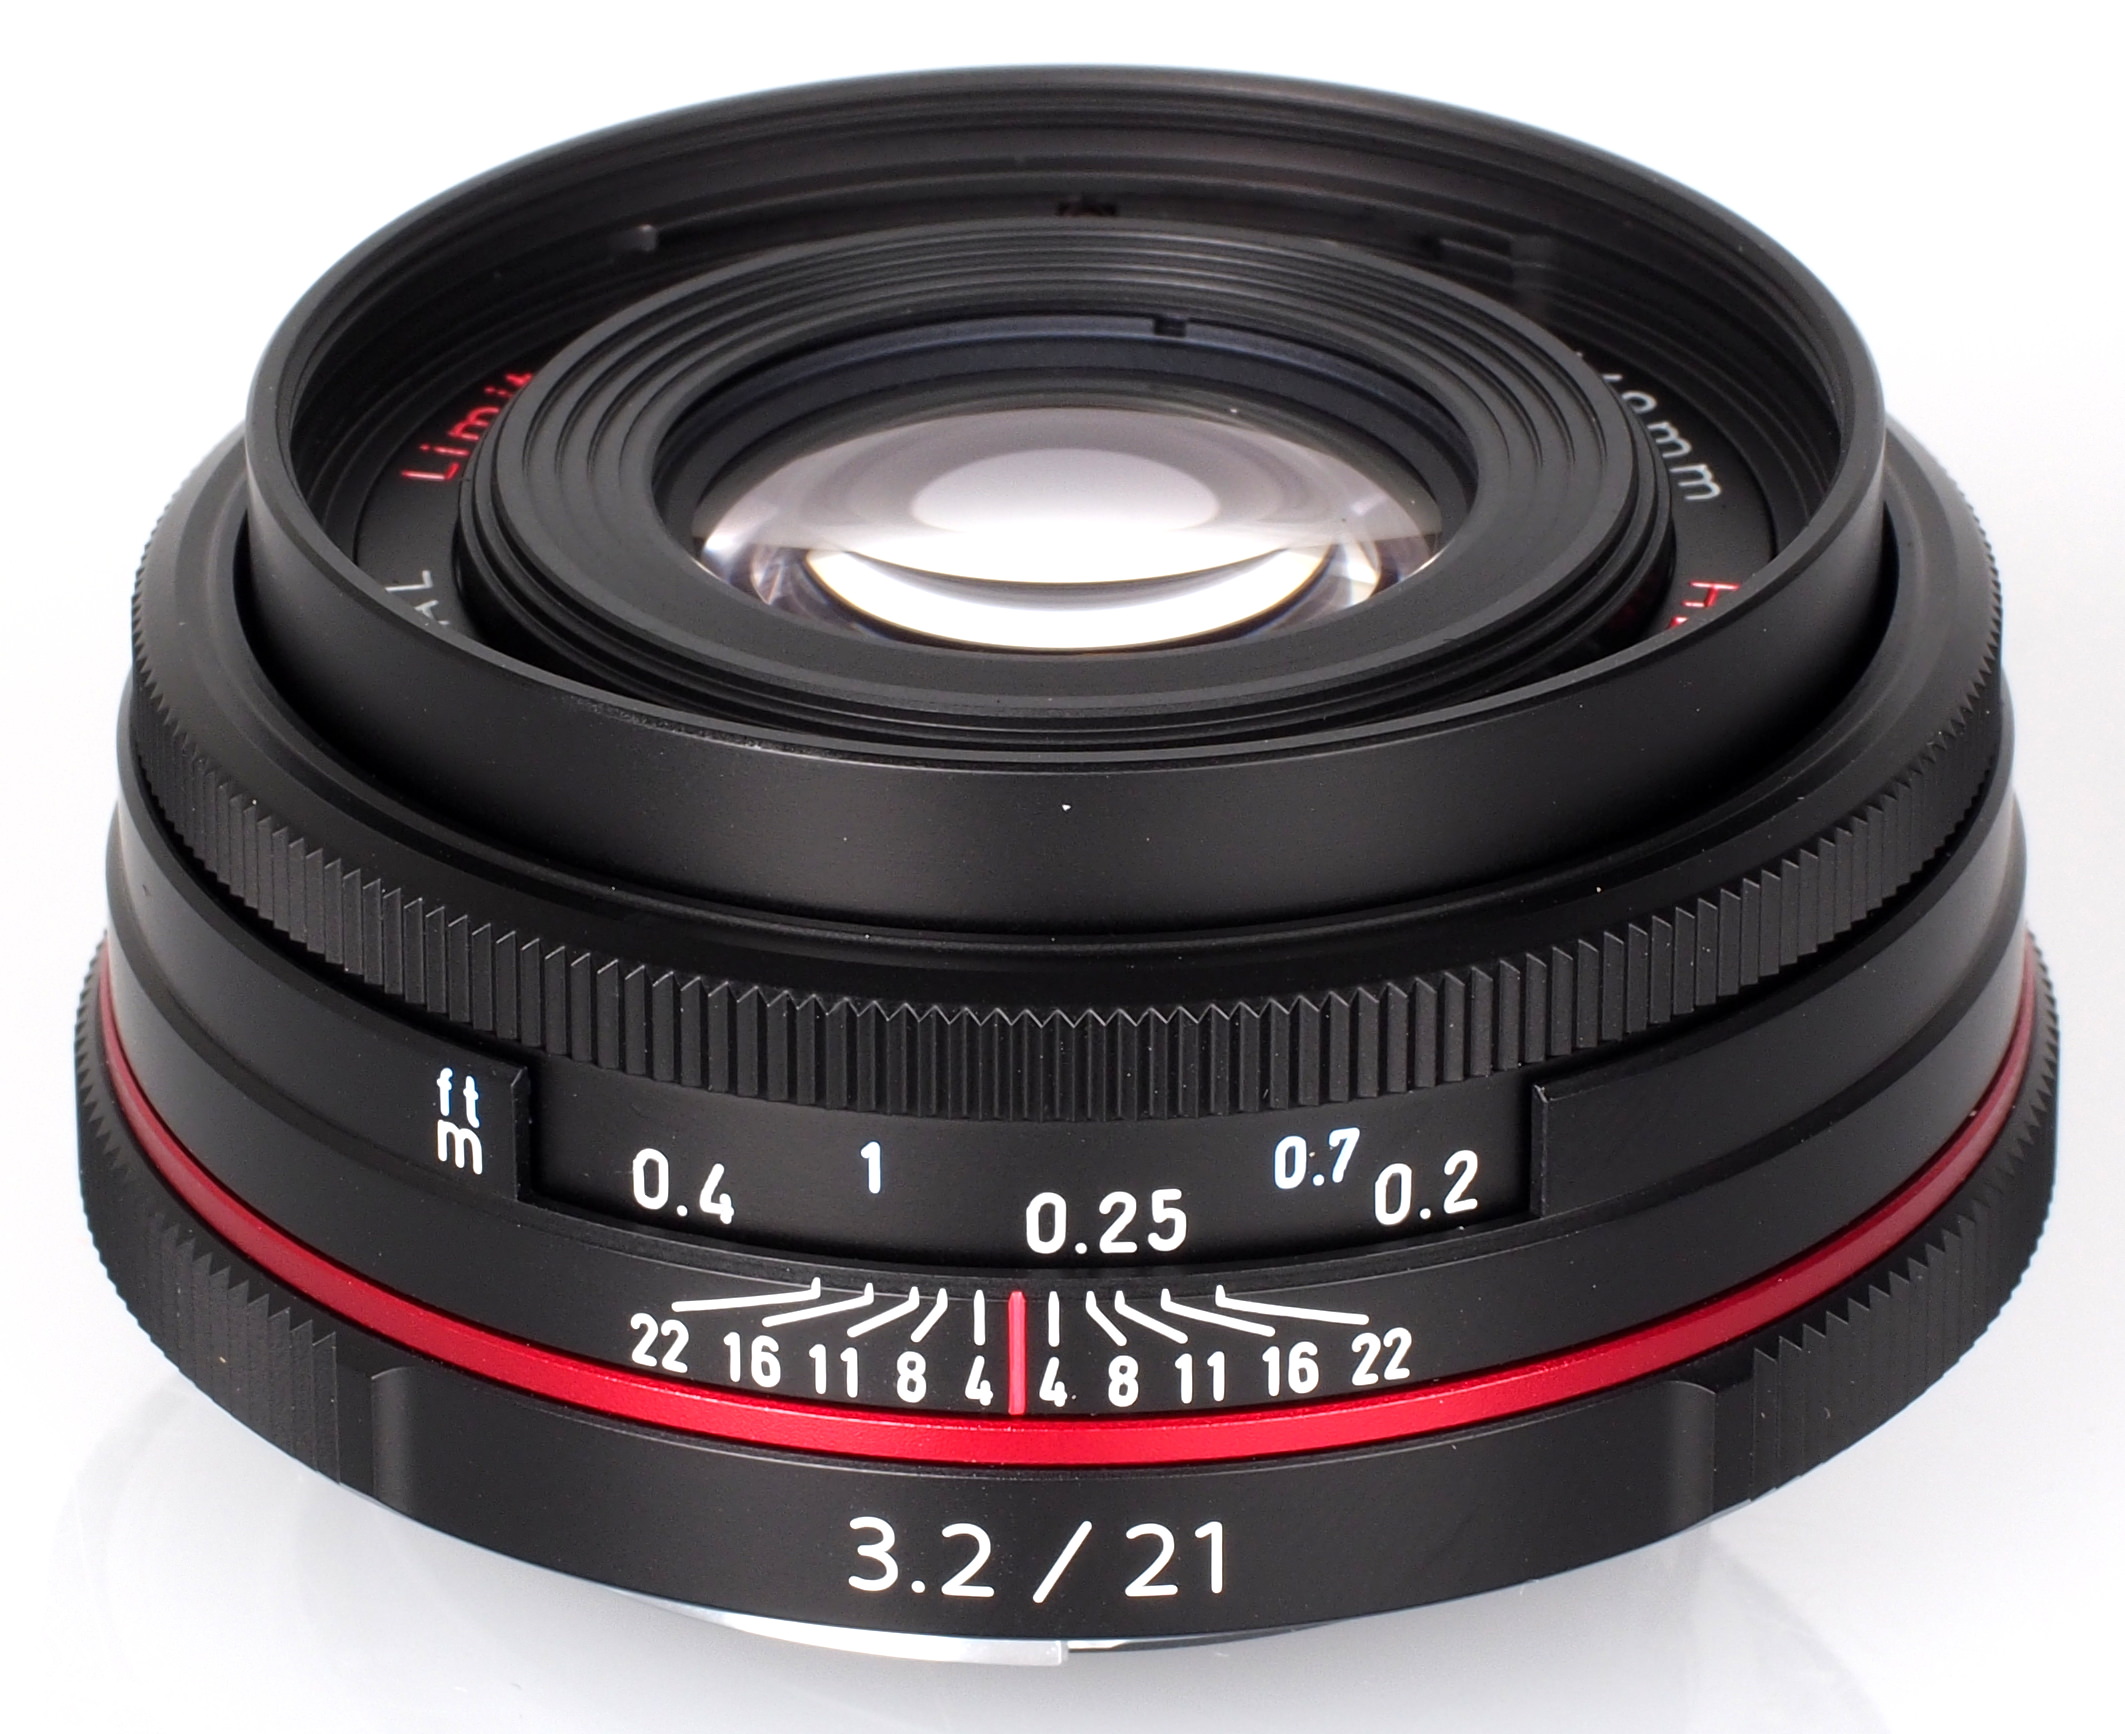 HD PENTAX-DA 21mm f/3.2 AL Limited Lens Review